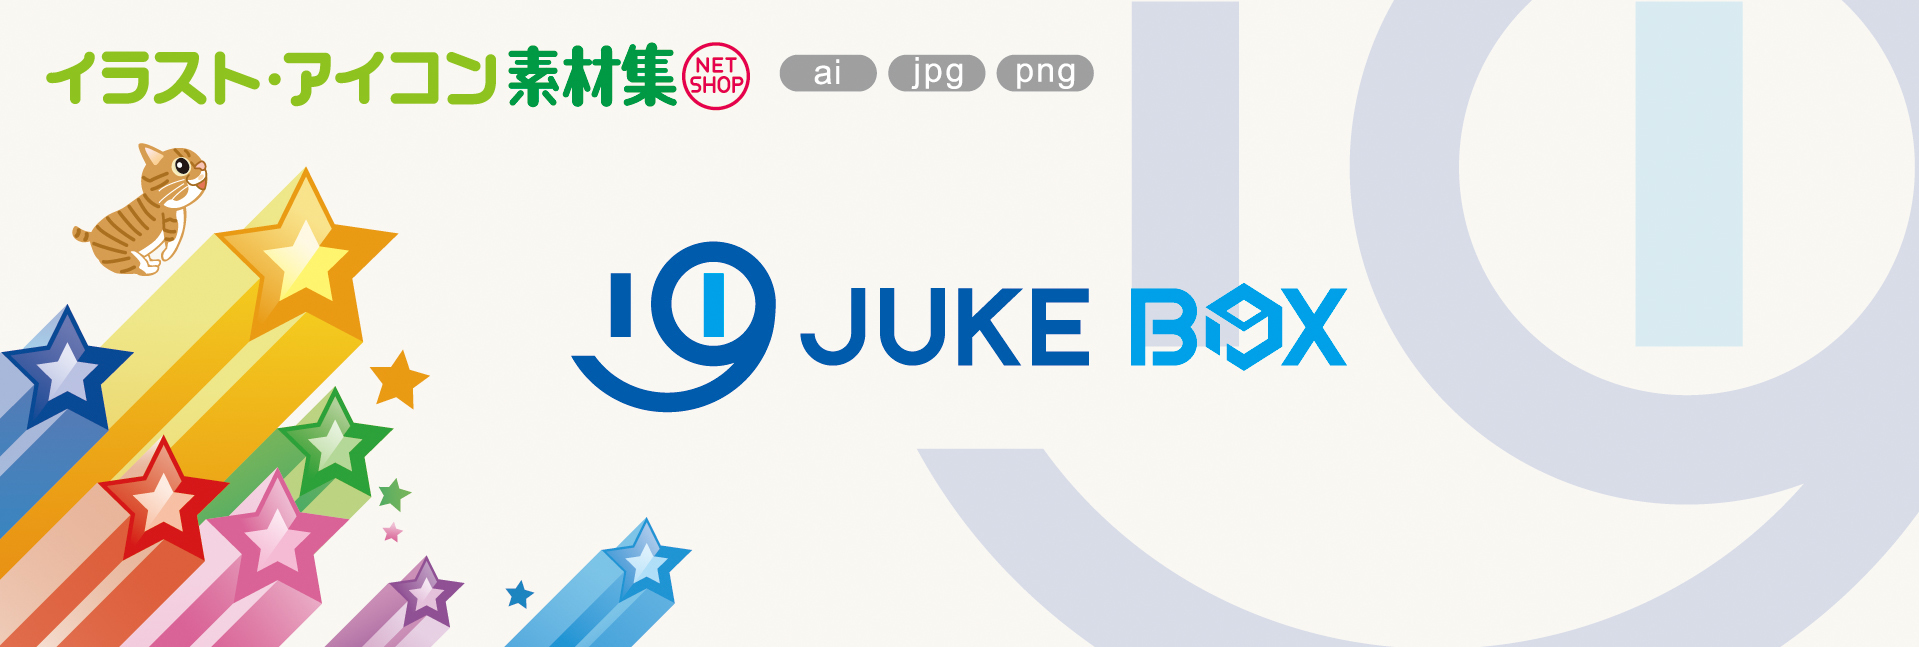 JUKEBOX イラスト素材集NET SHOP ～商用利用可能な使えるベクターイラスト素材集～